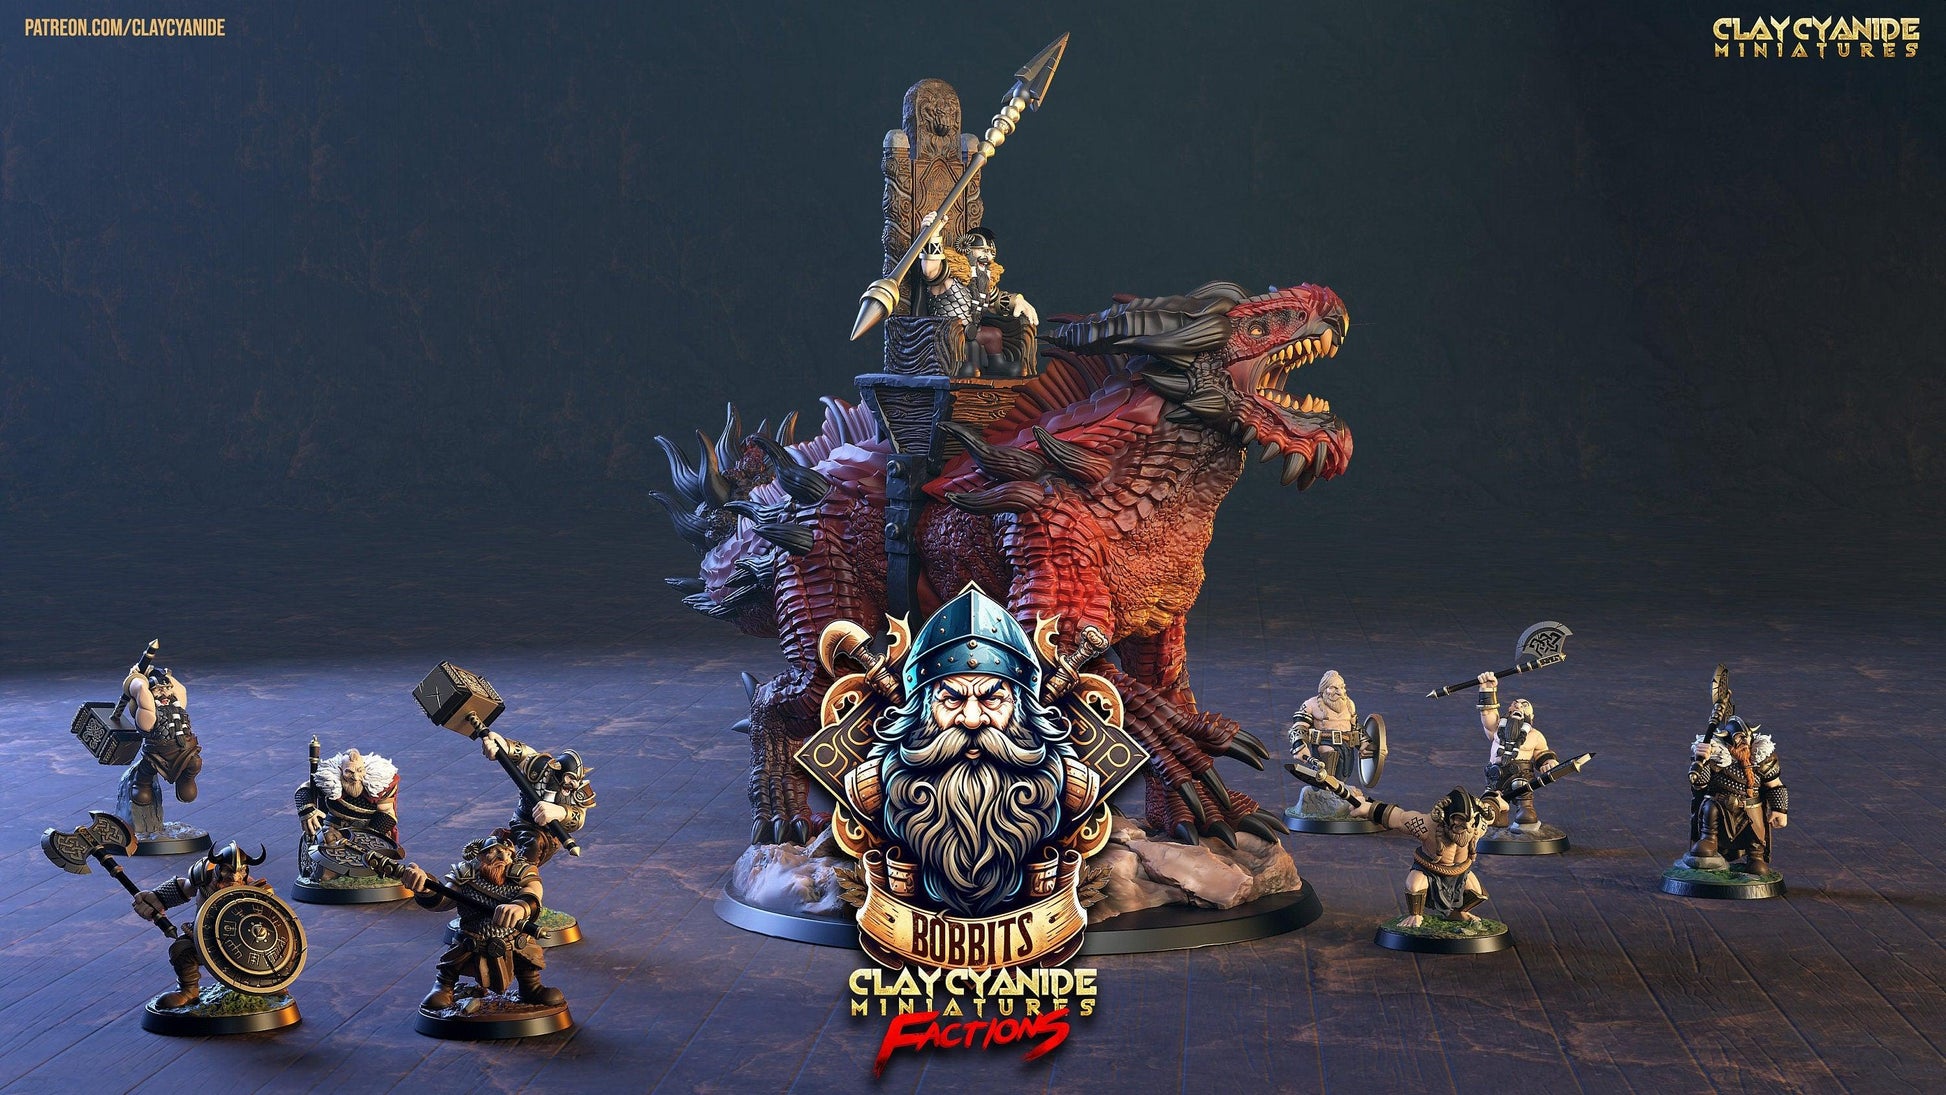 Kopiko DnD Miniature: Valiant Dwarf Warrior from The Bobbits Guild 32mm Scale - Plague Miniatures shop for DnD Miniatures